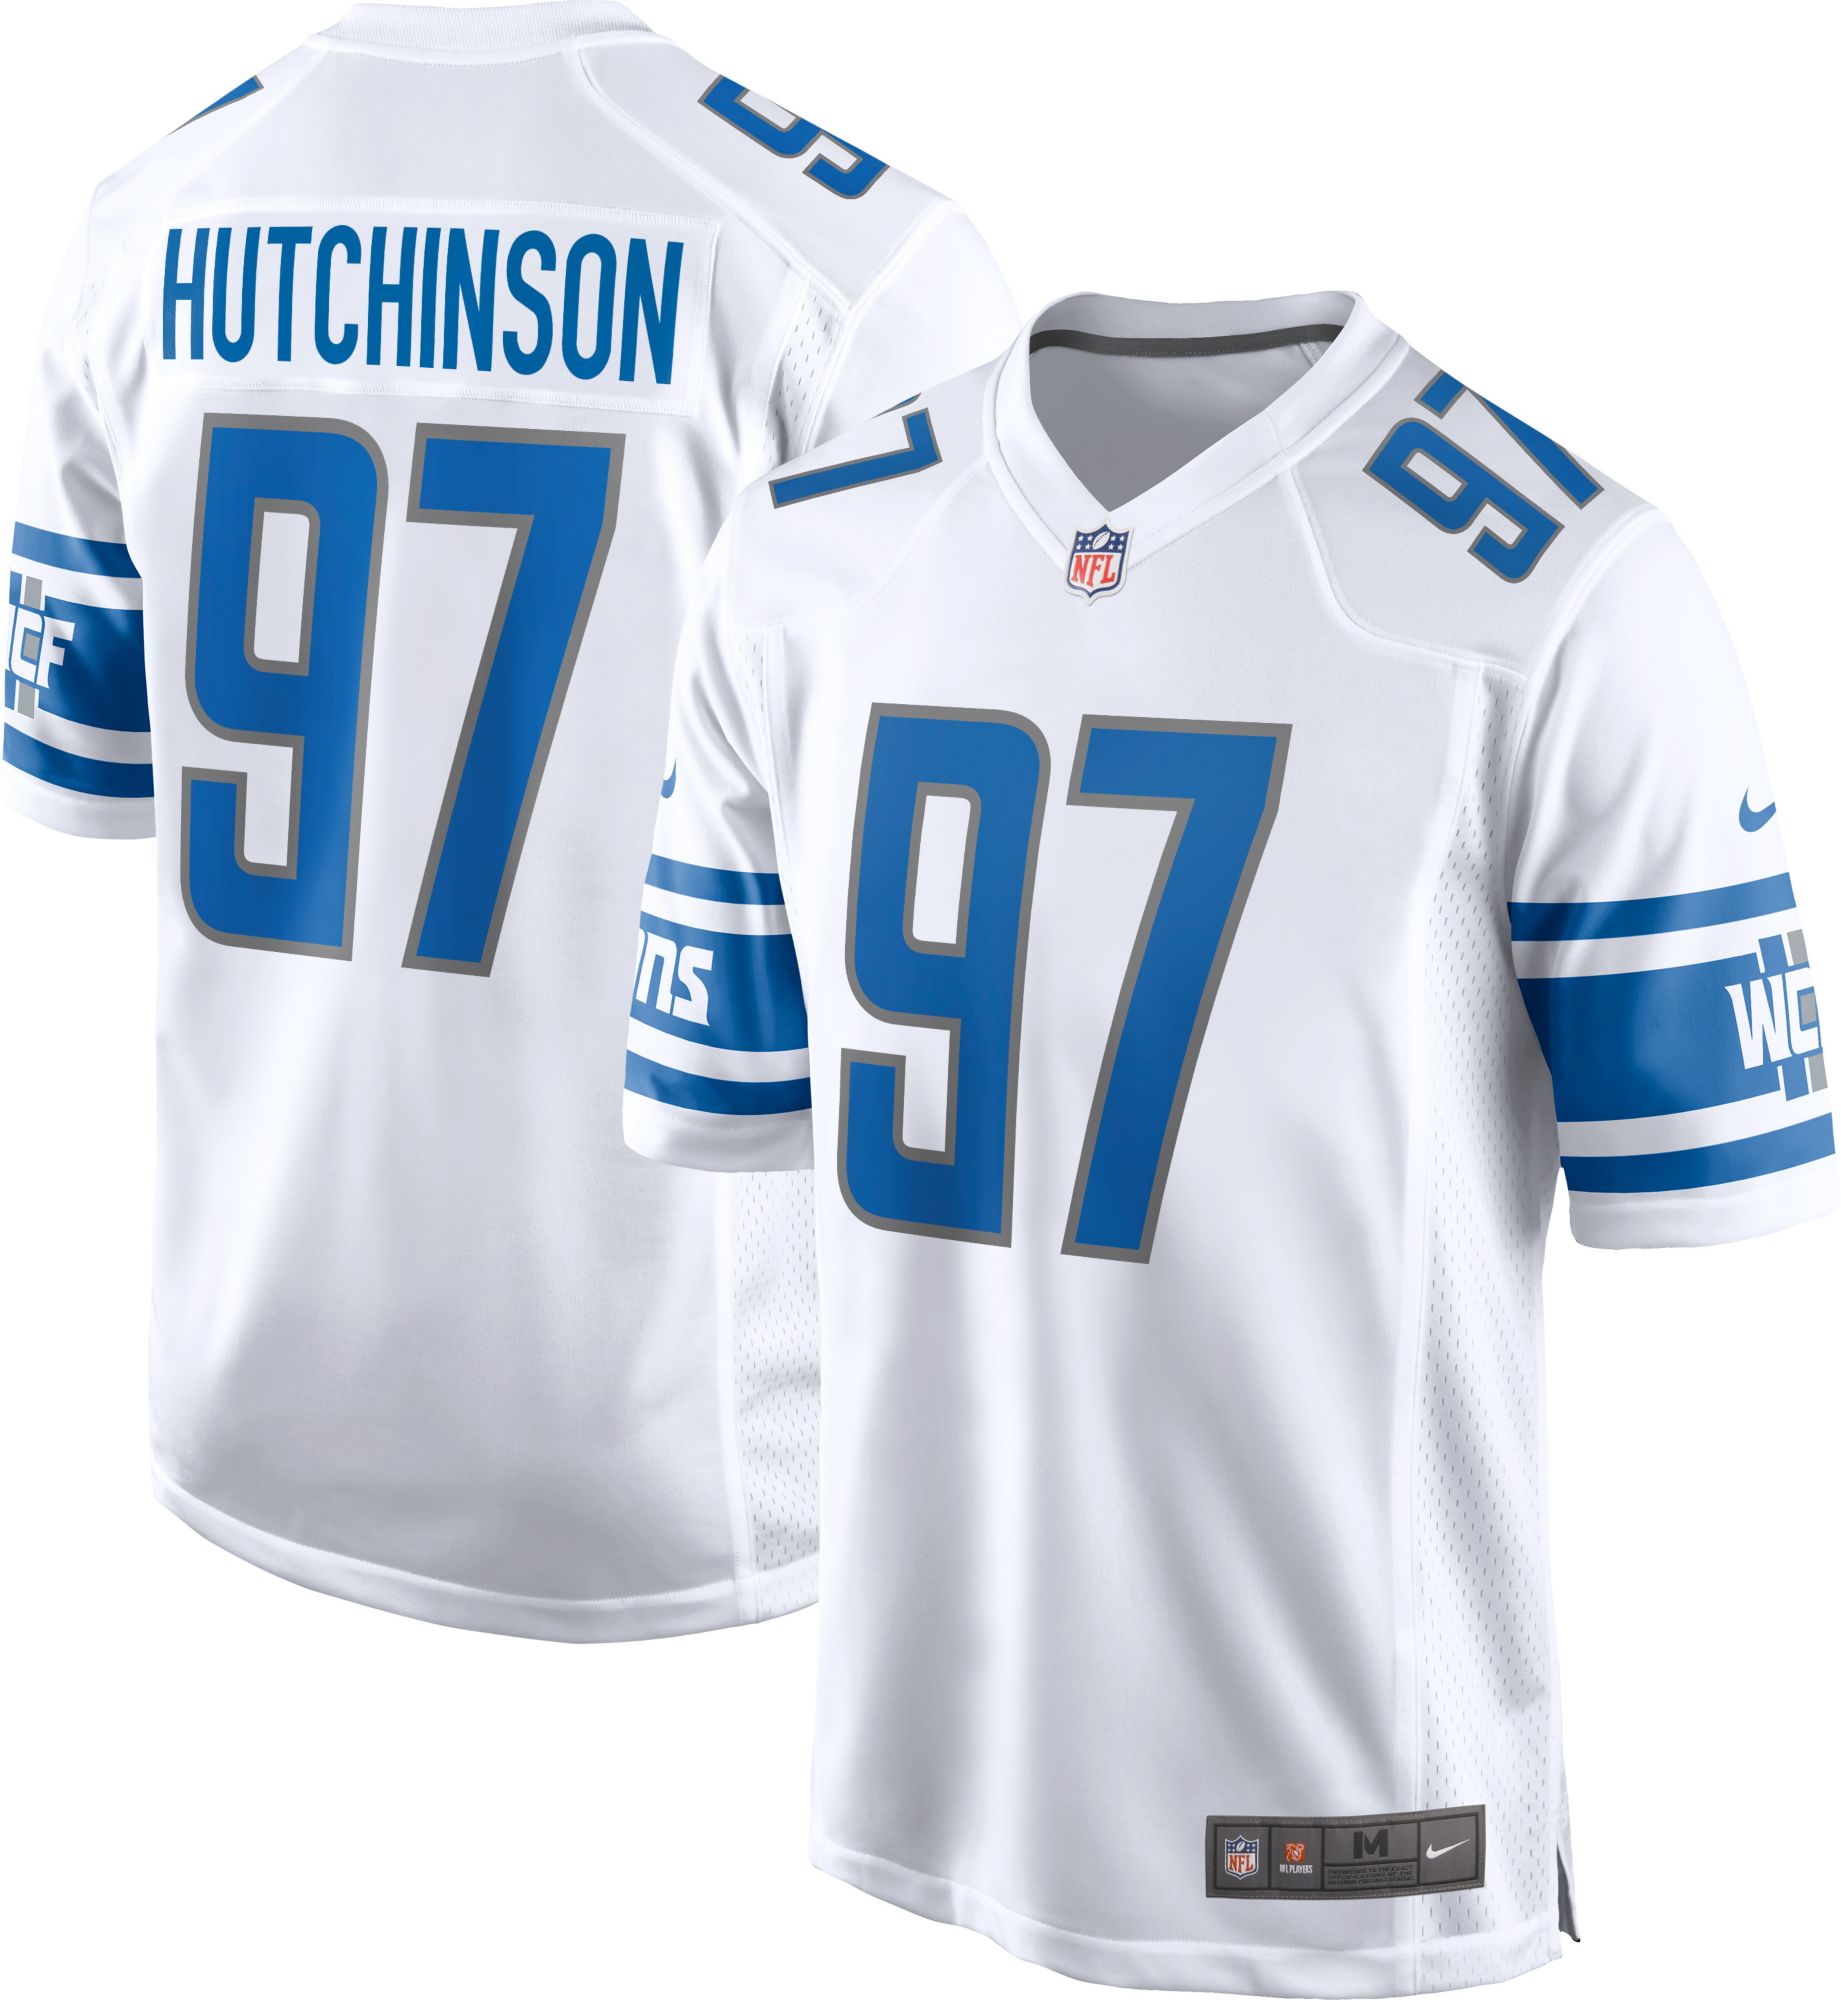 Detroit Lions reveal Aidan Hutchinson's NFL jersey number